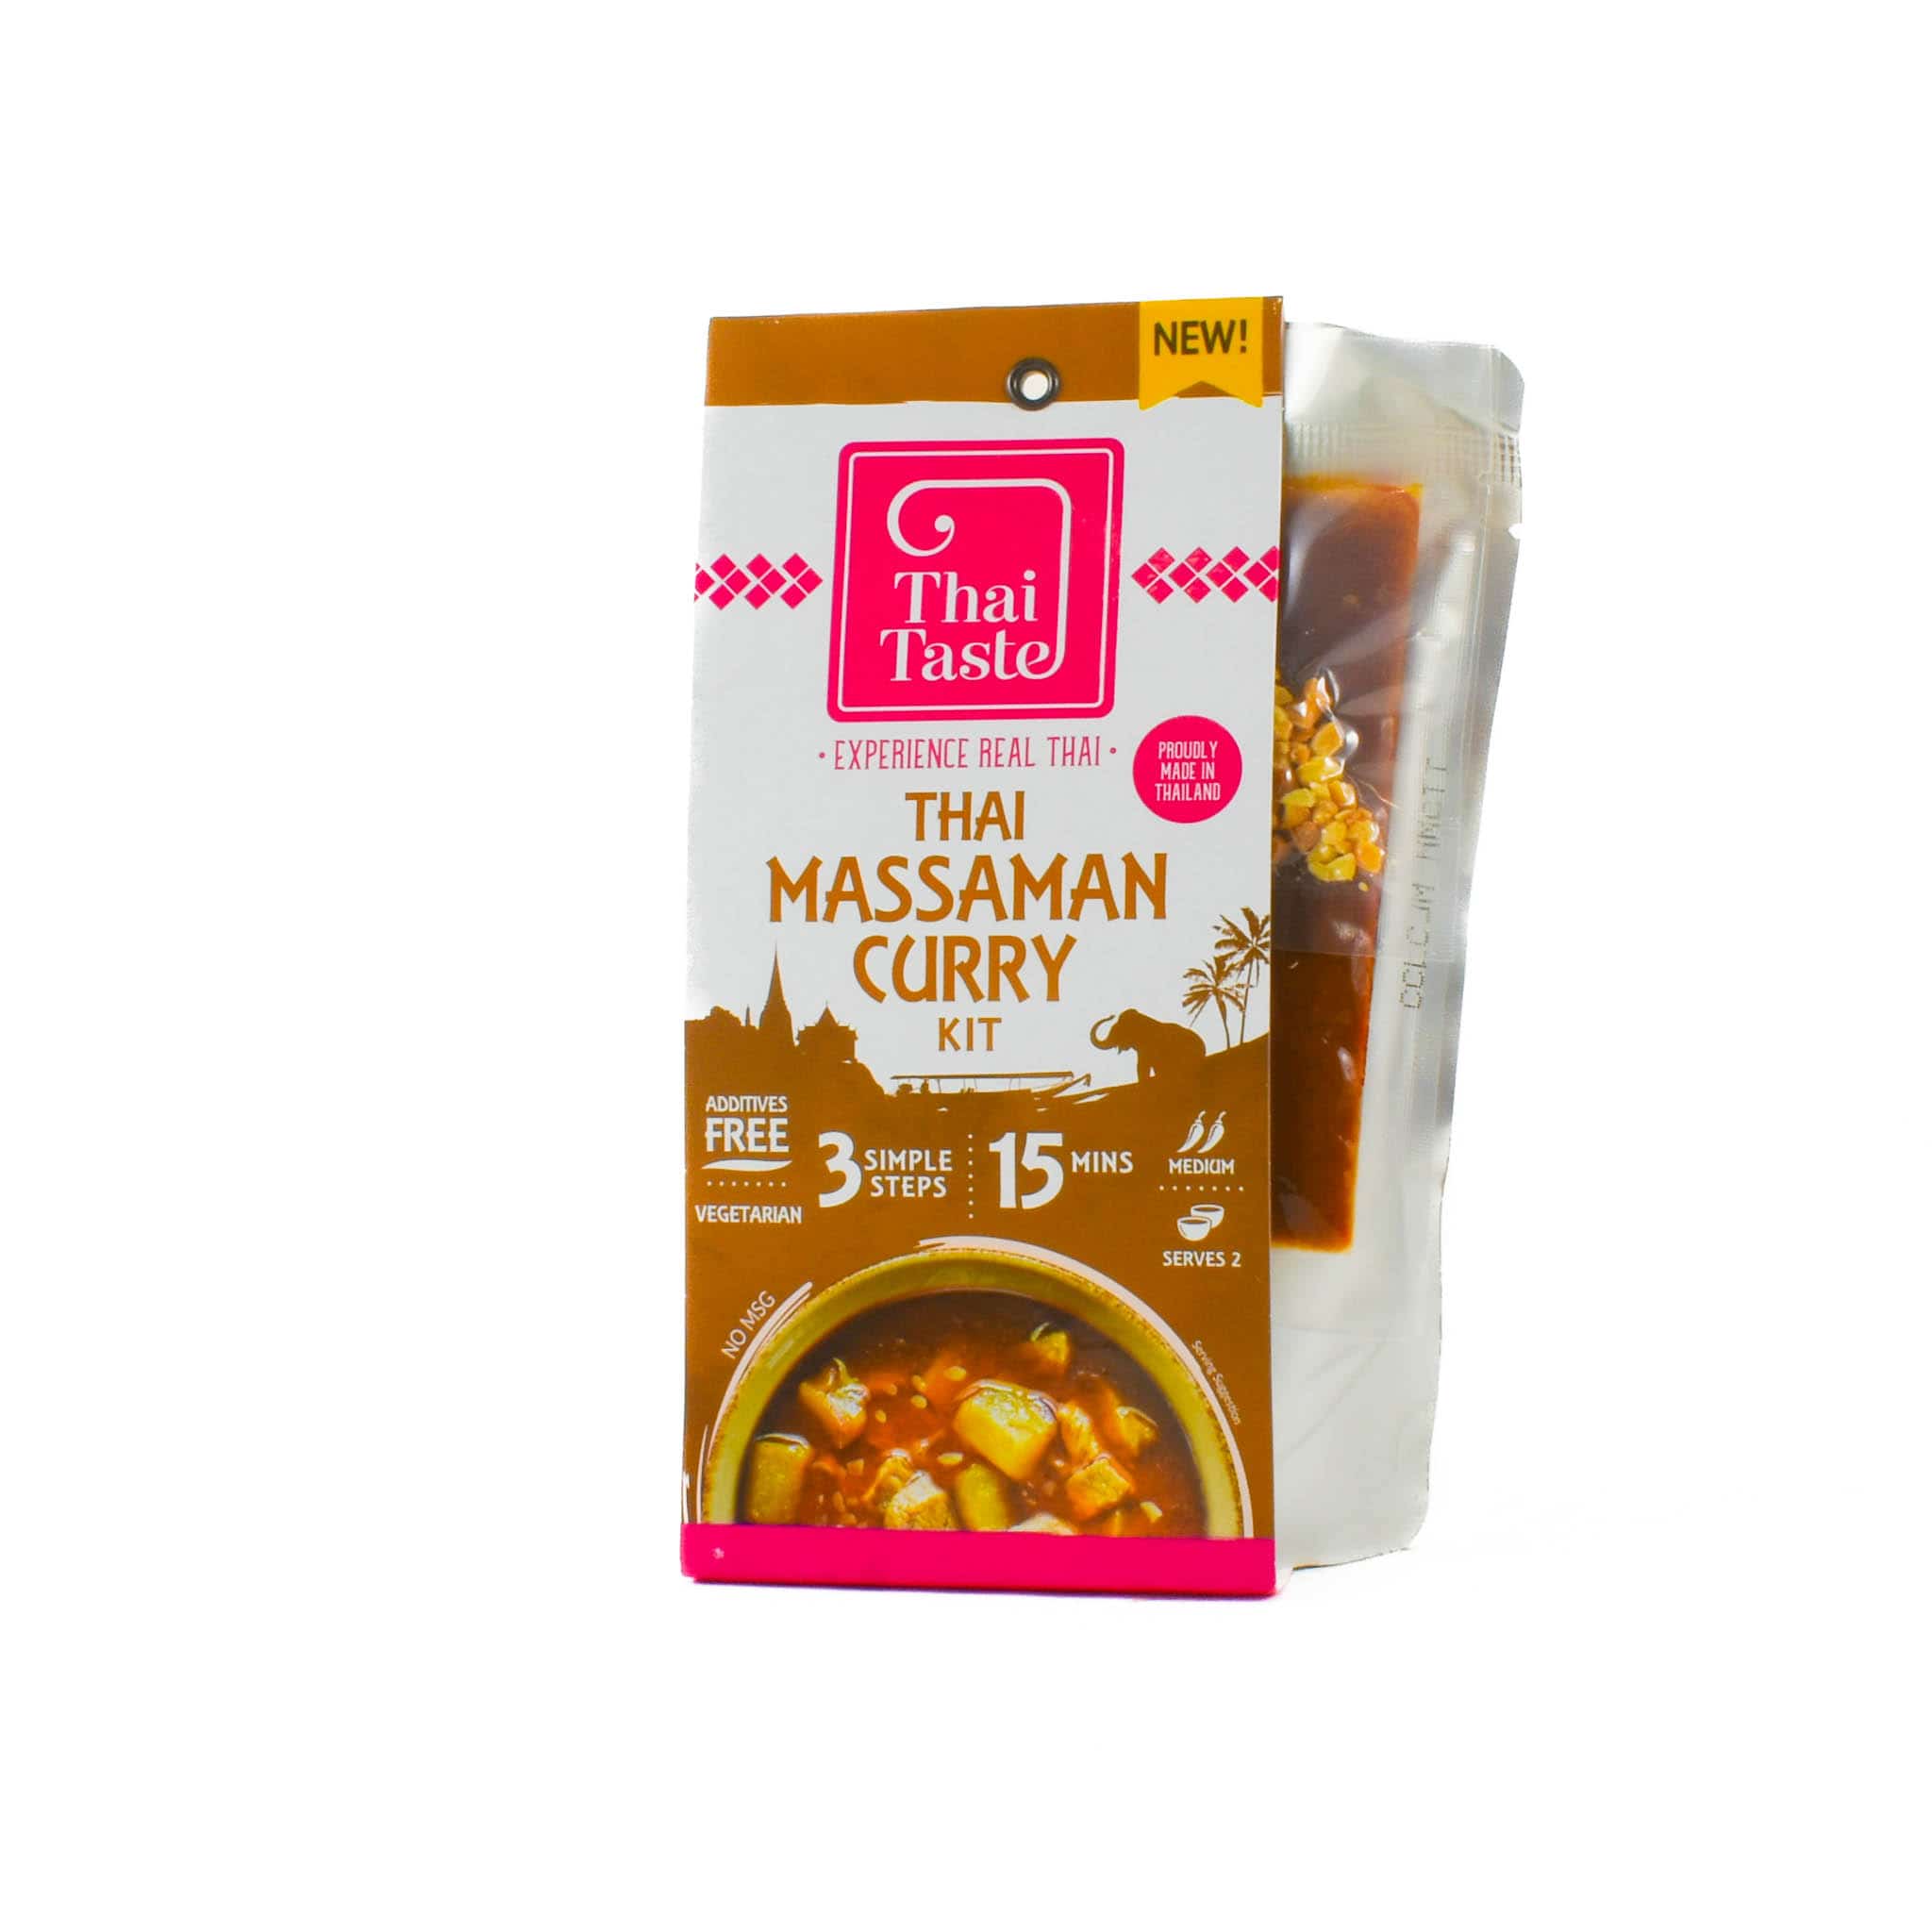 Thai Taste Thai Massaman Curry Kit (Sleeve) 235g